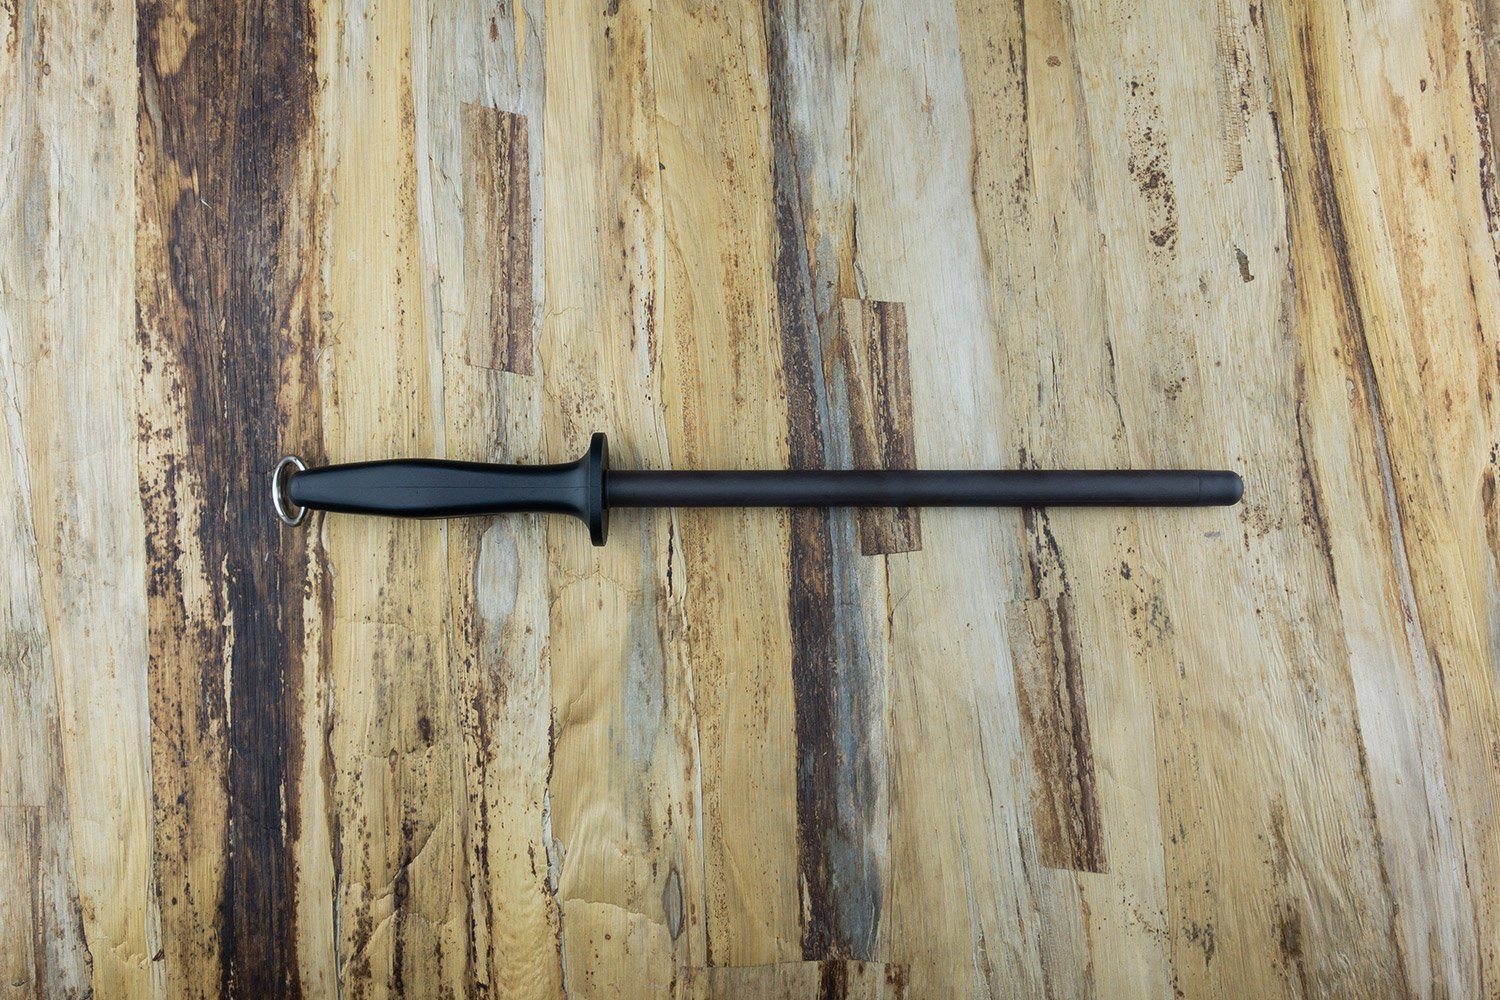 Knifewear Black Ceramic Honing Rod from Knifewear